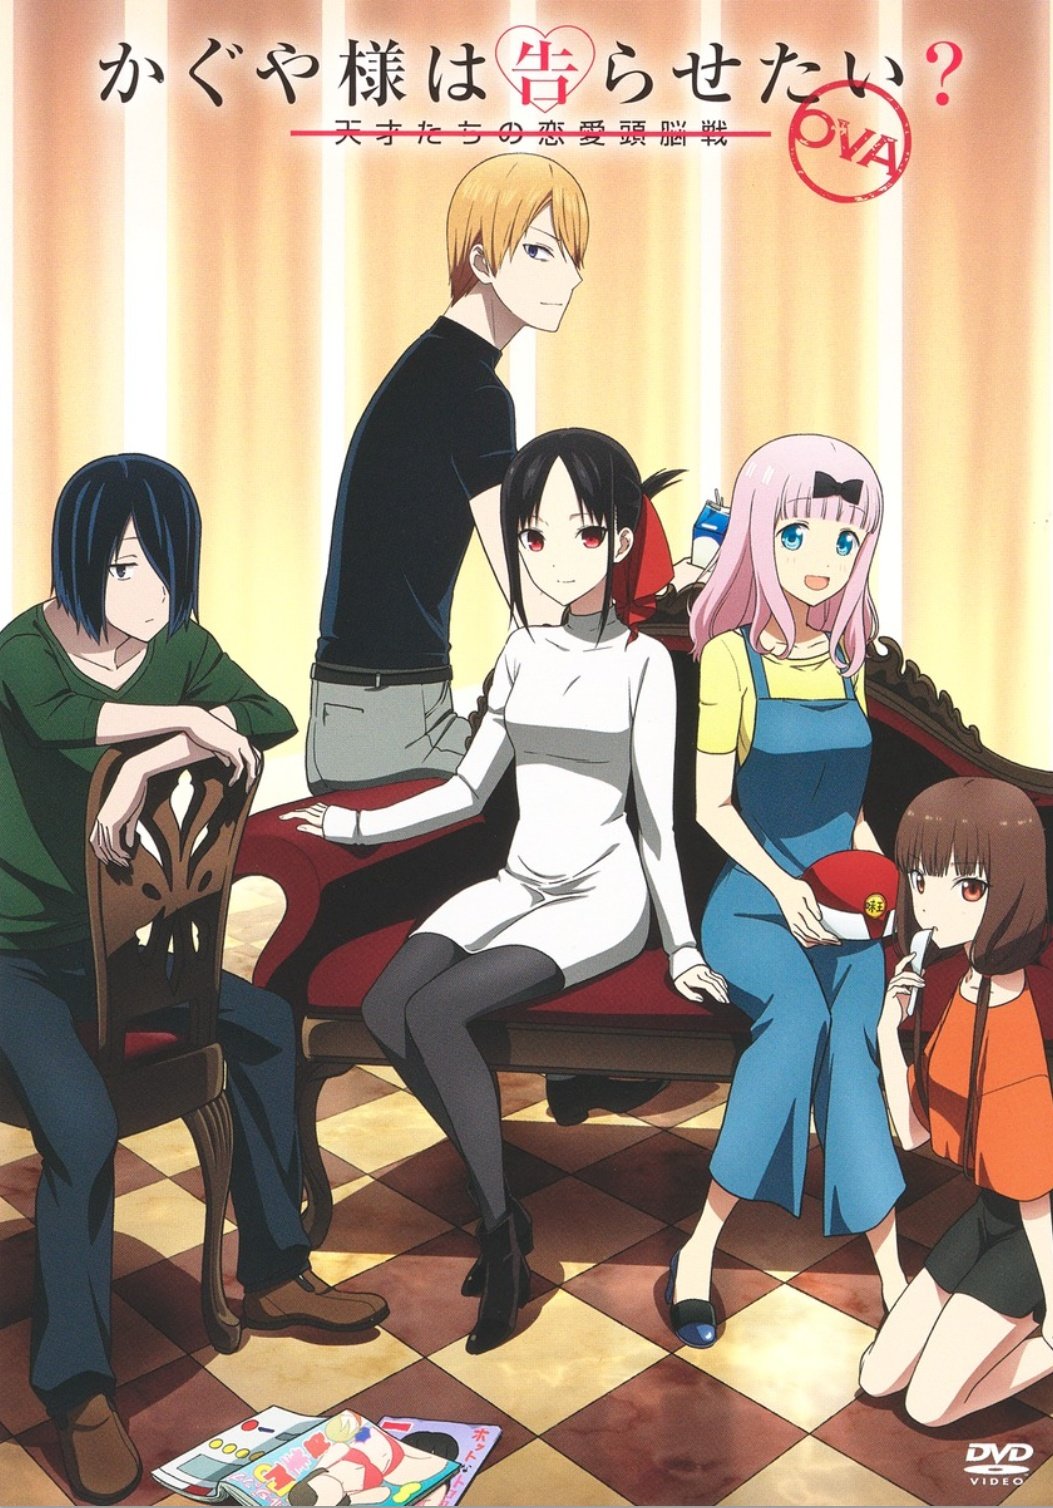 Kaguya-sama season 3 anime: Release date, story, characters